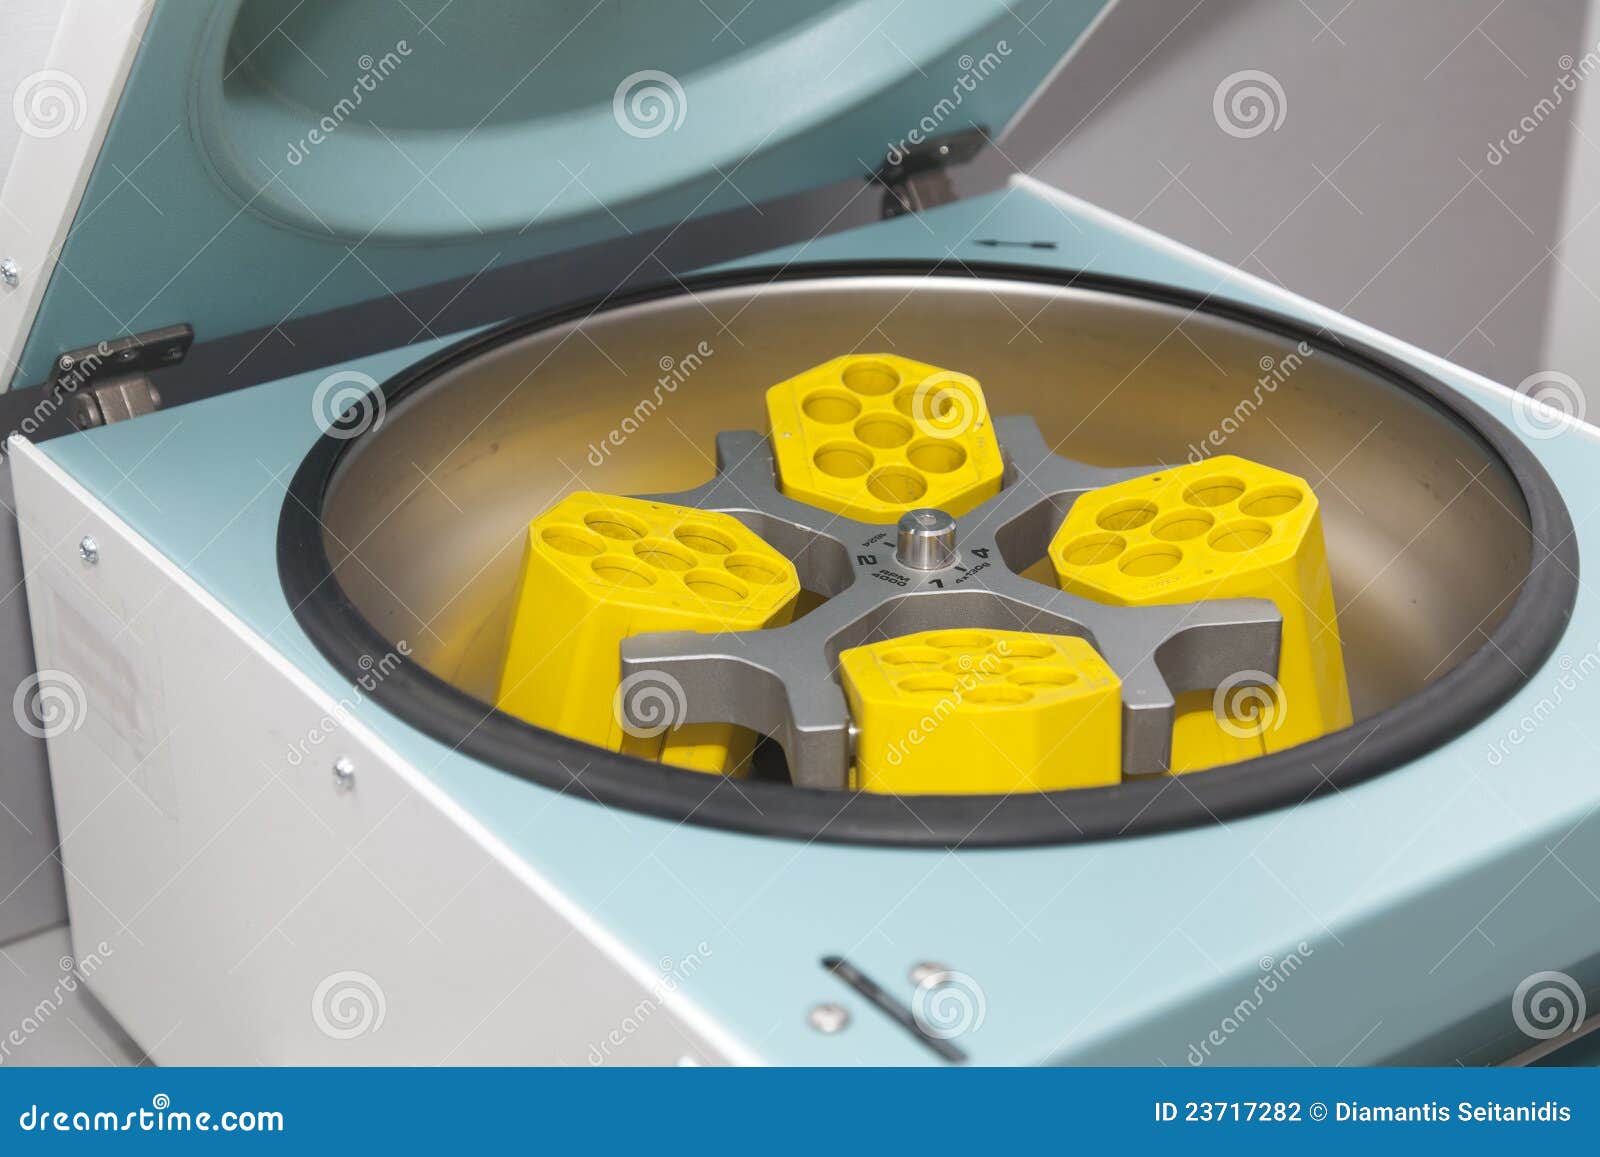 centrifuge equipment